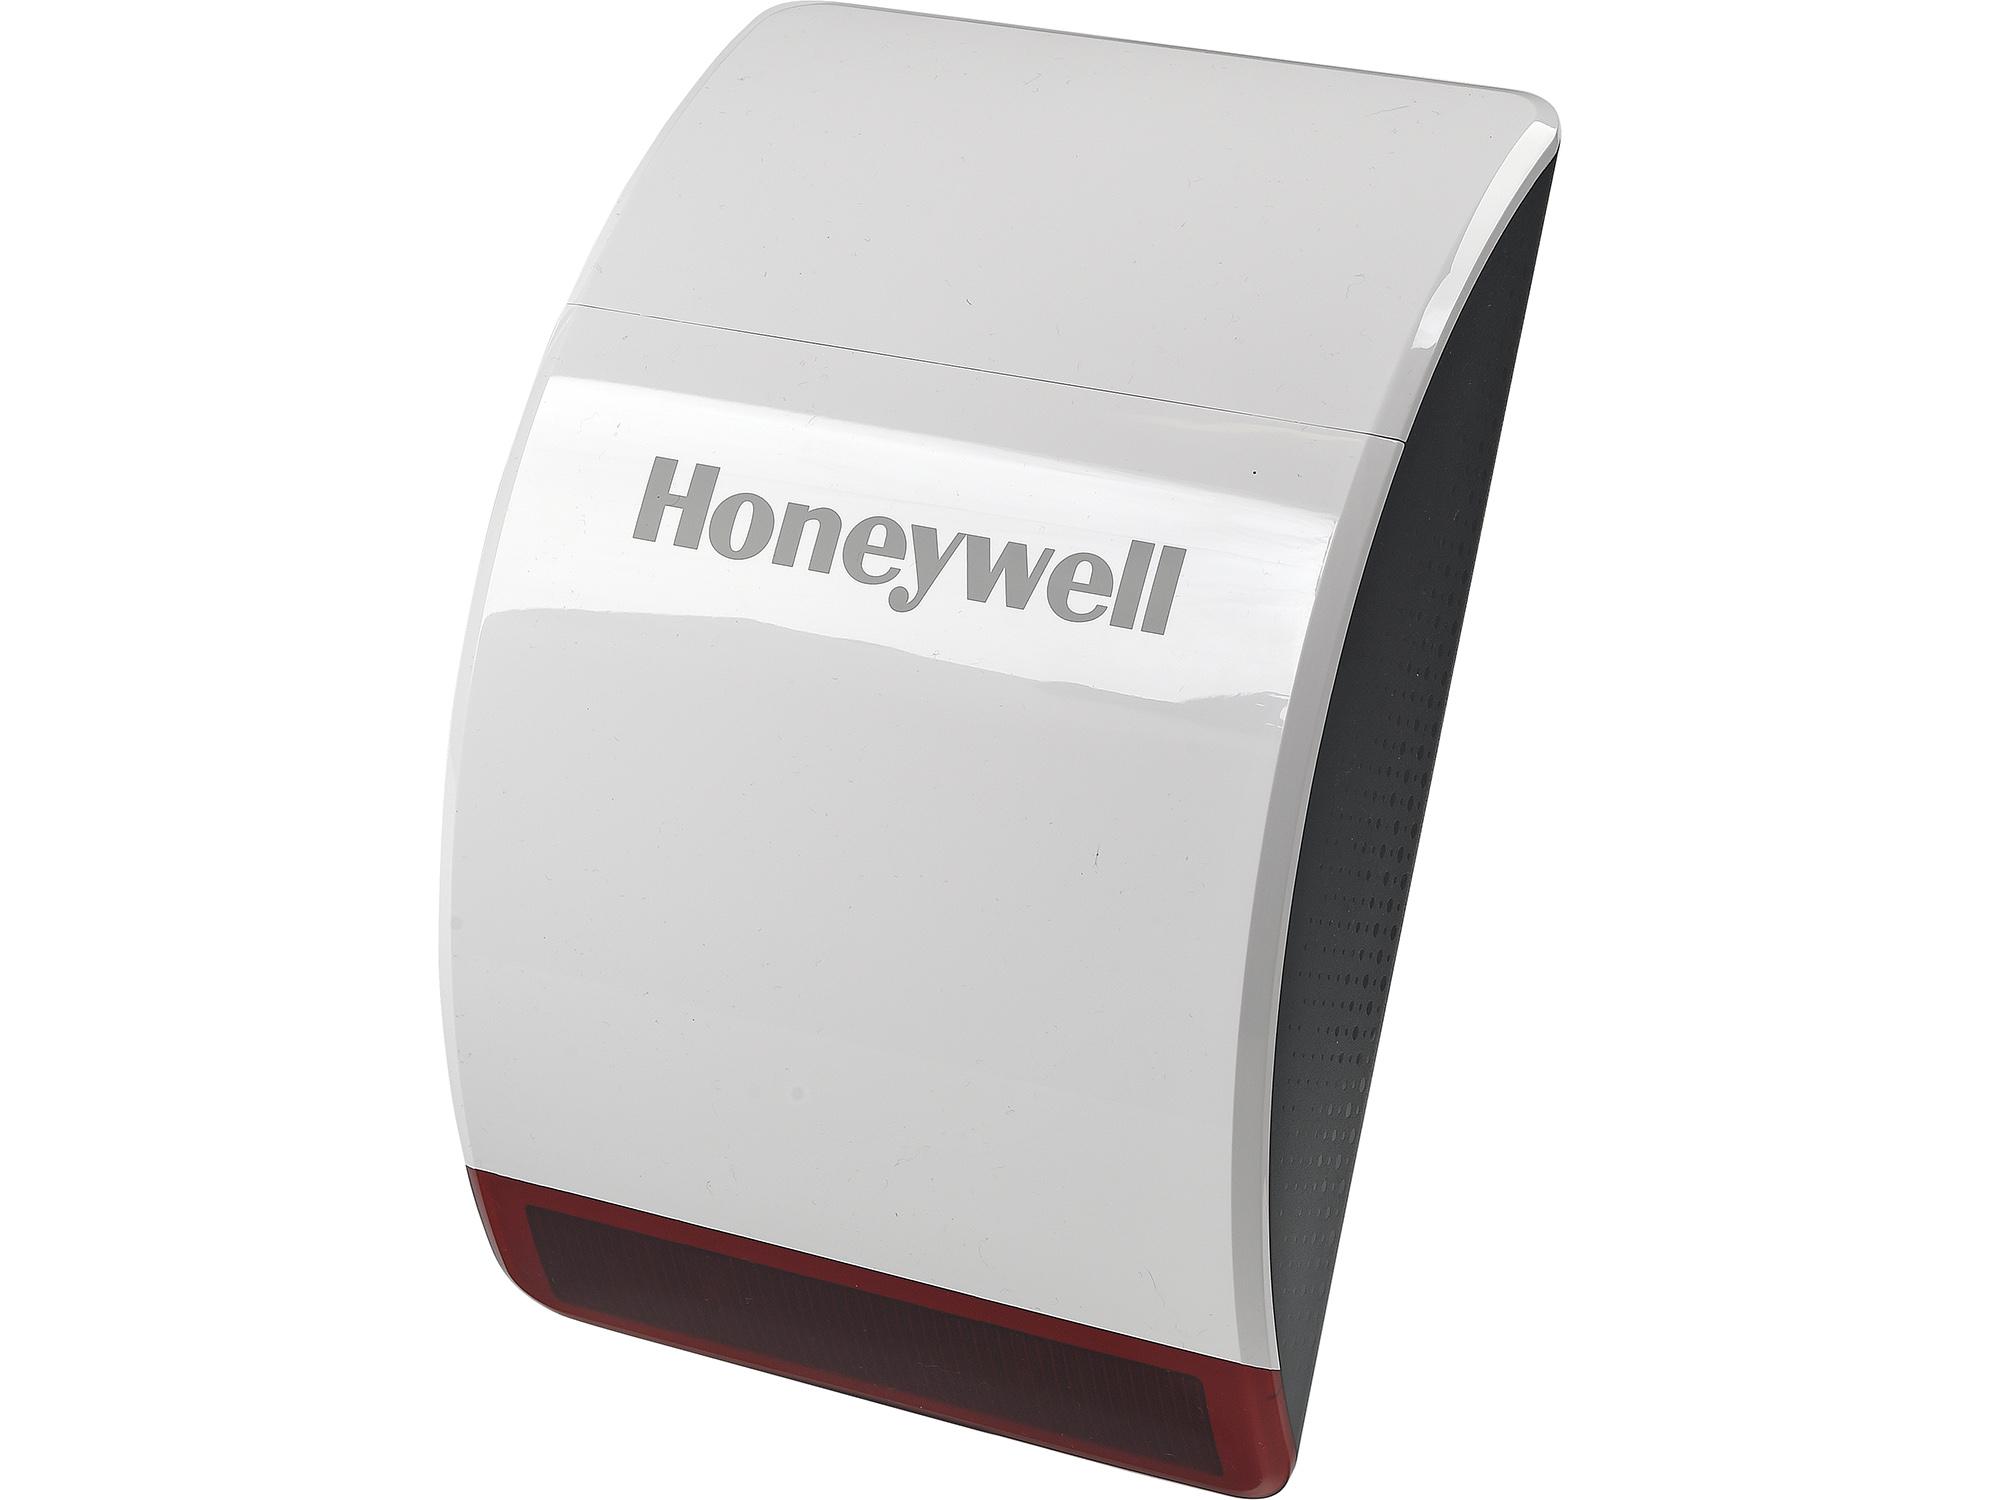 Honeywell Honeywell HS311S Wireless Quick Start Alarm with Remote Control Fob 5004100966551 